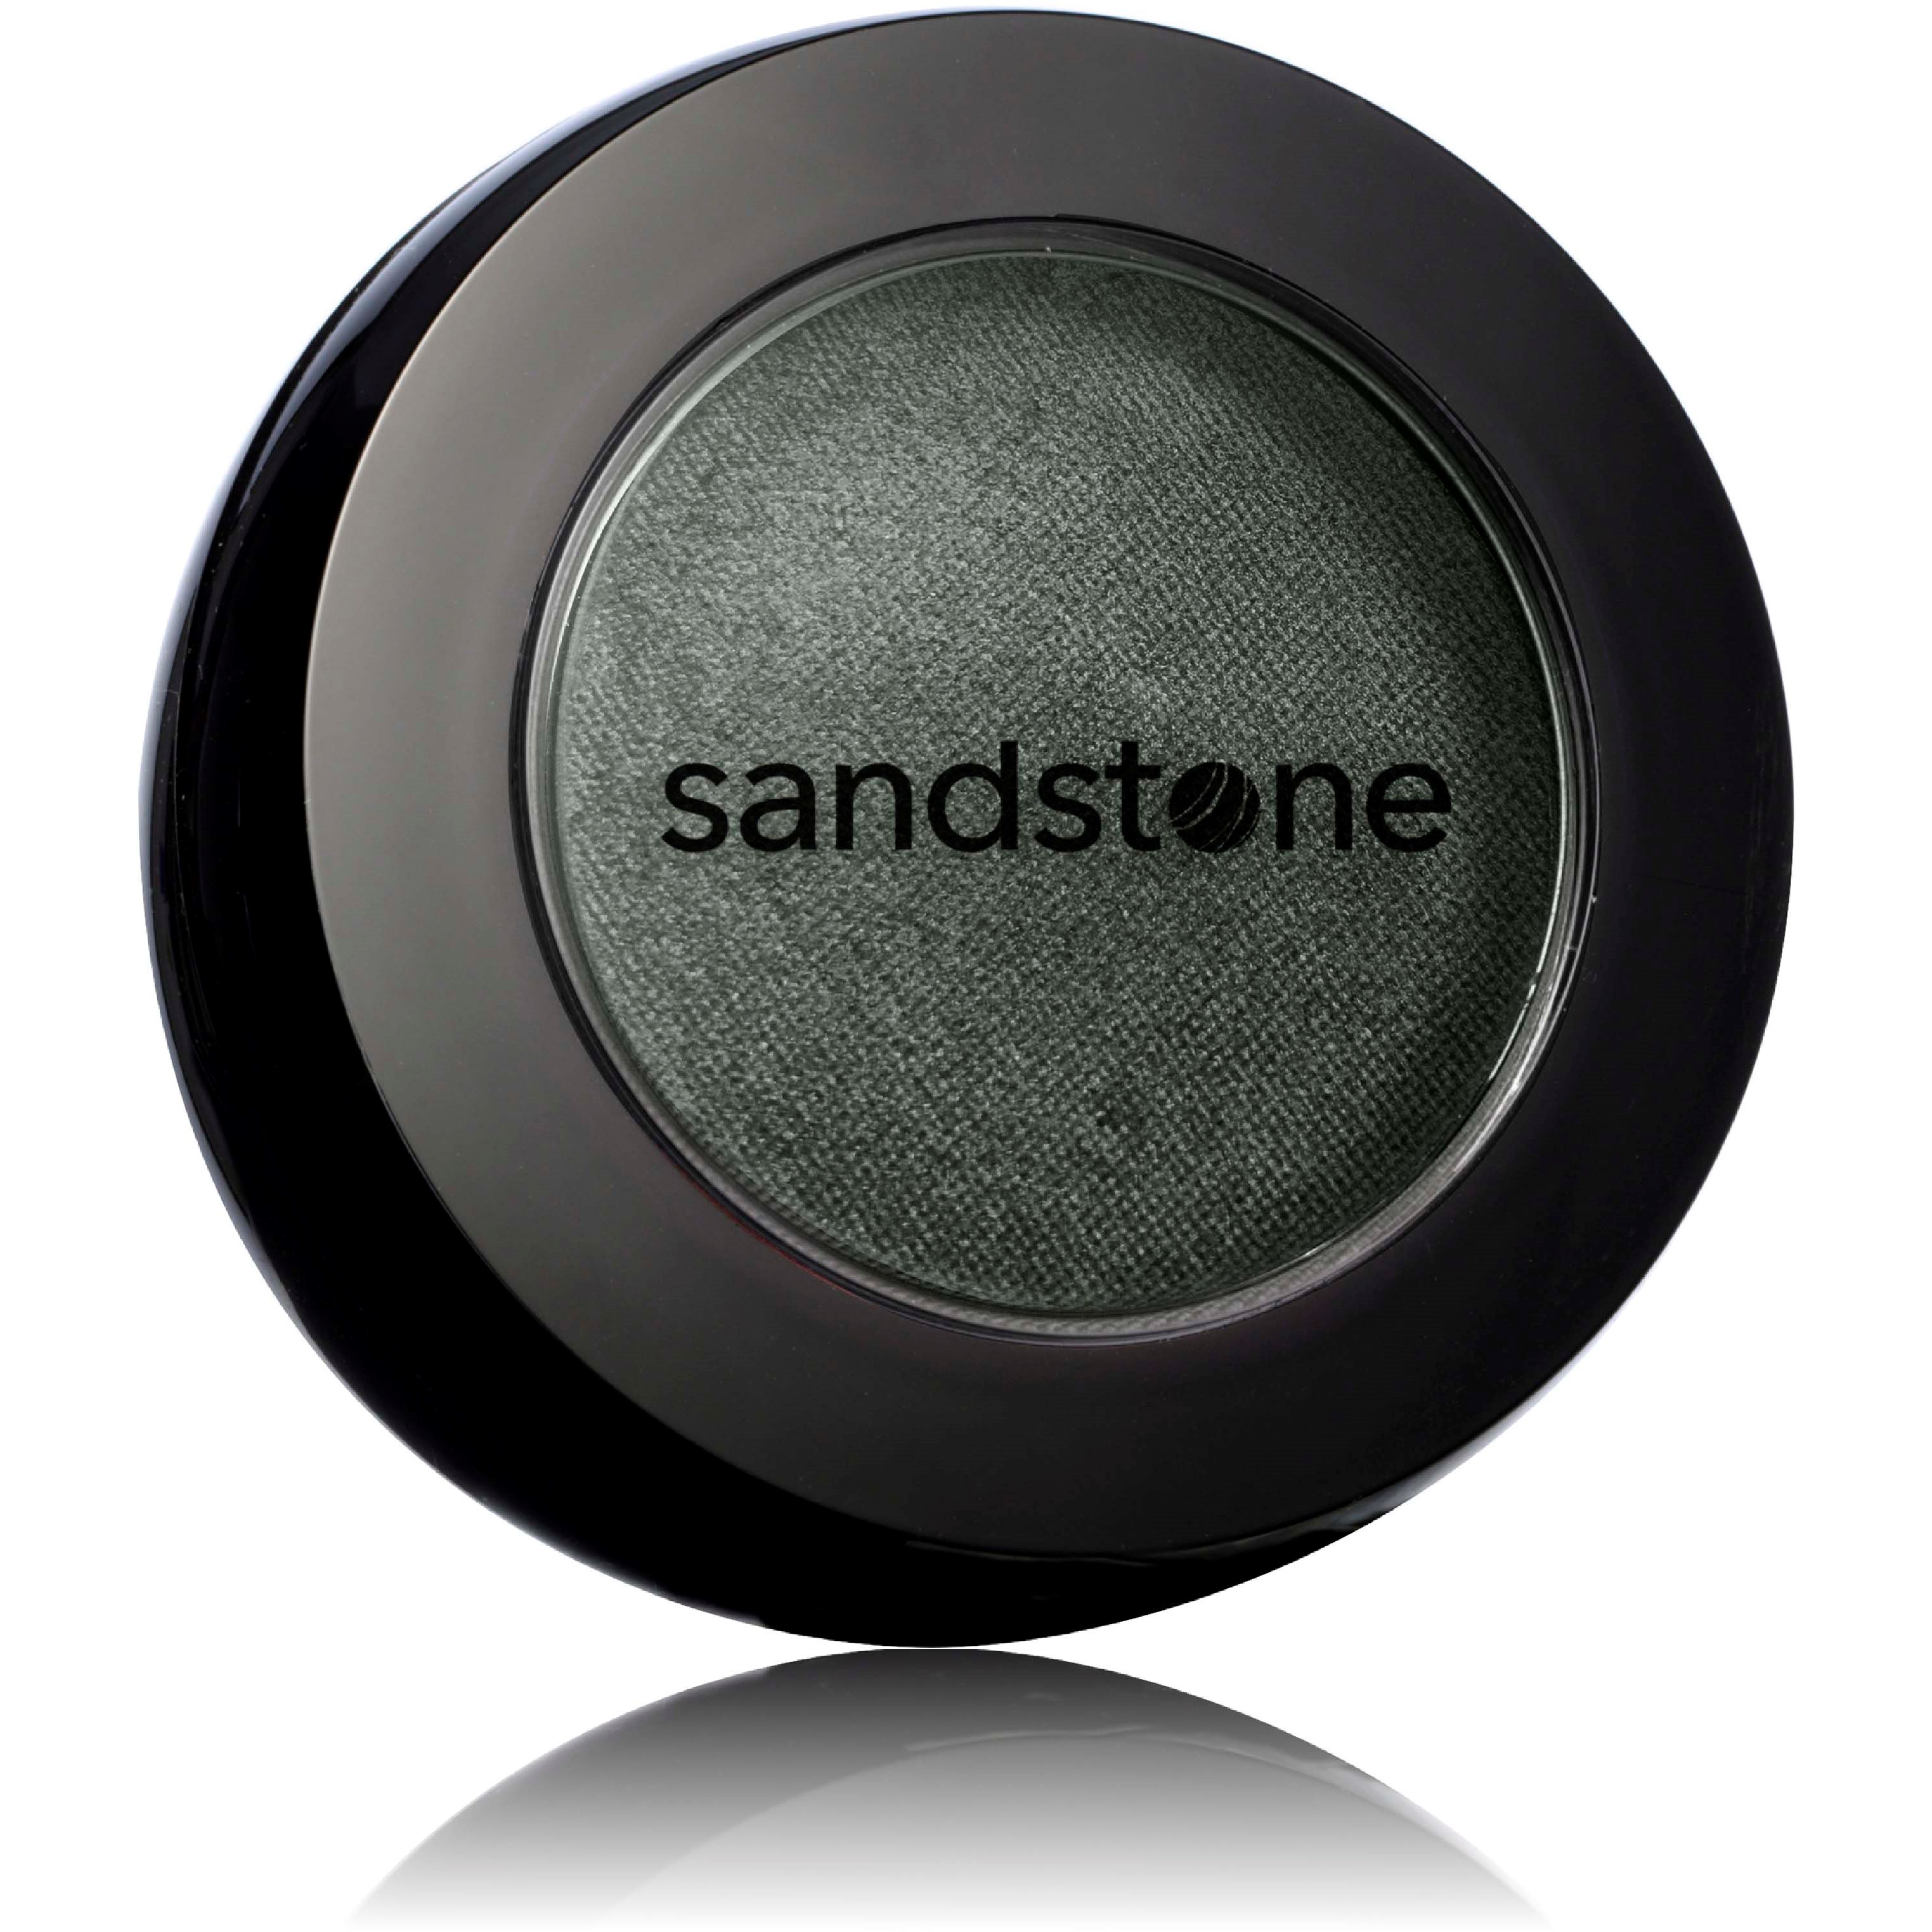 Sandstone Eyeshadow 501 Deep Forest